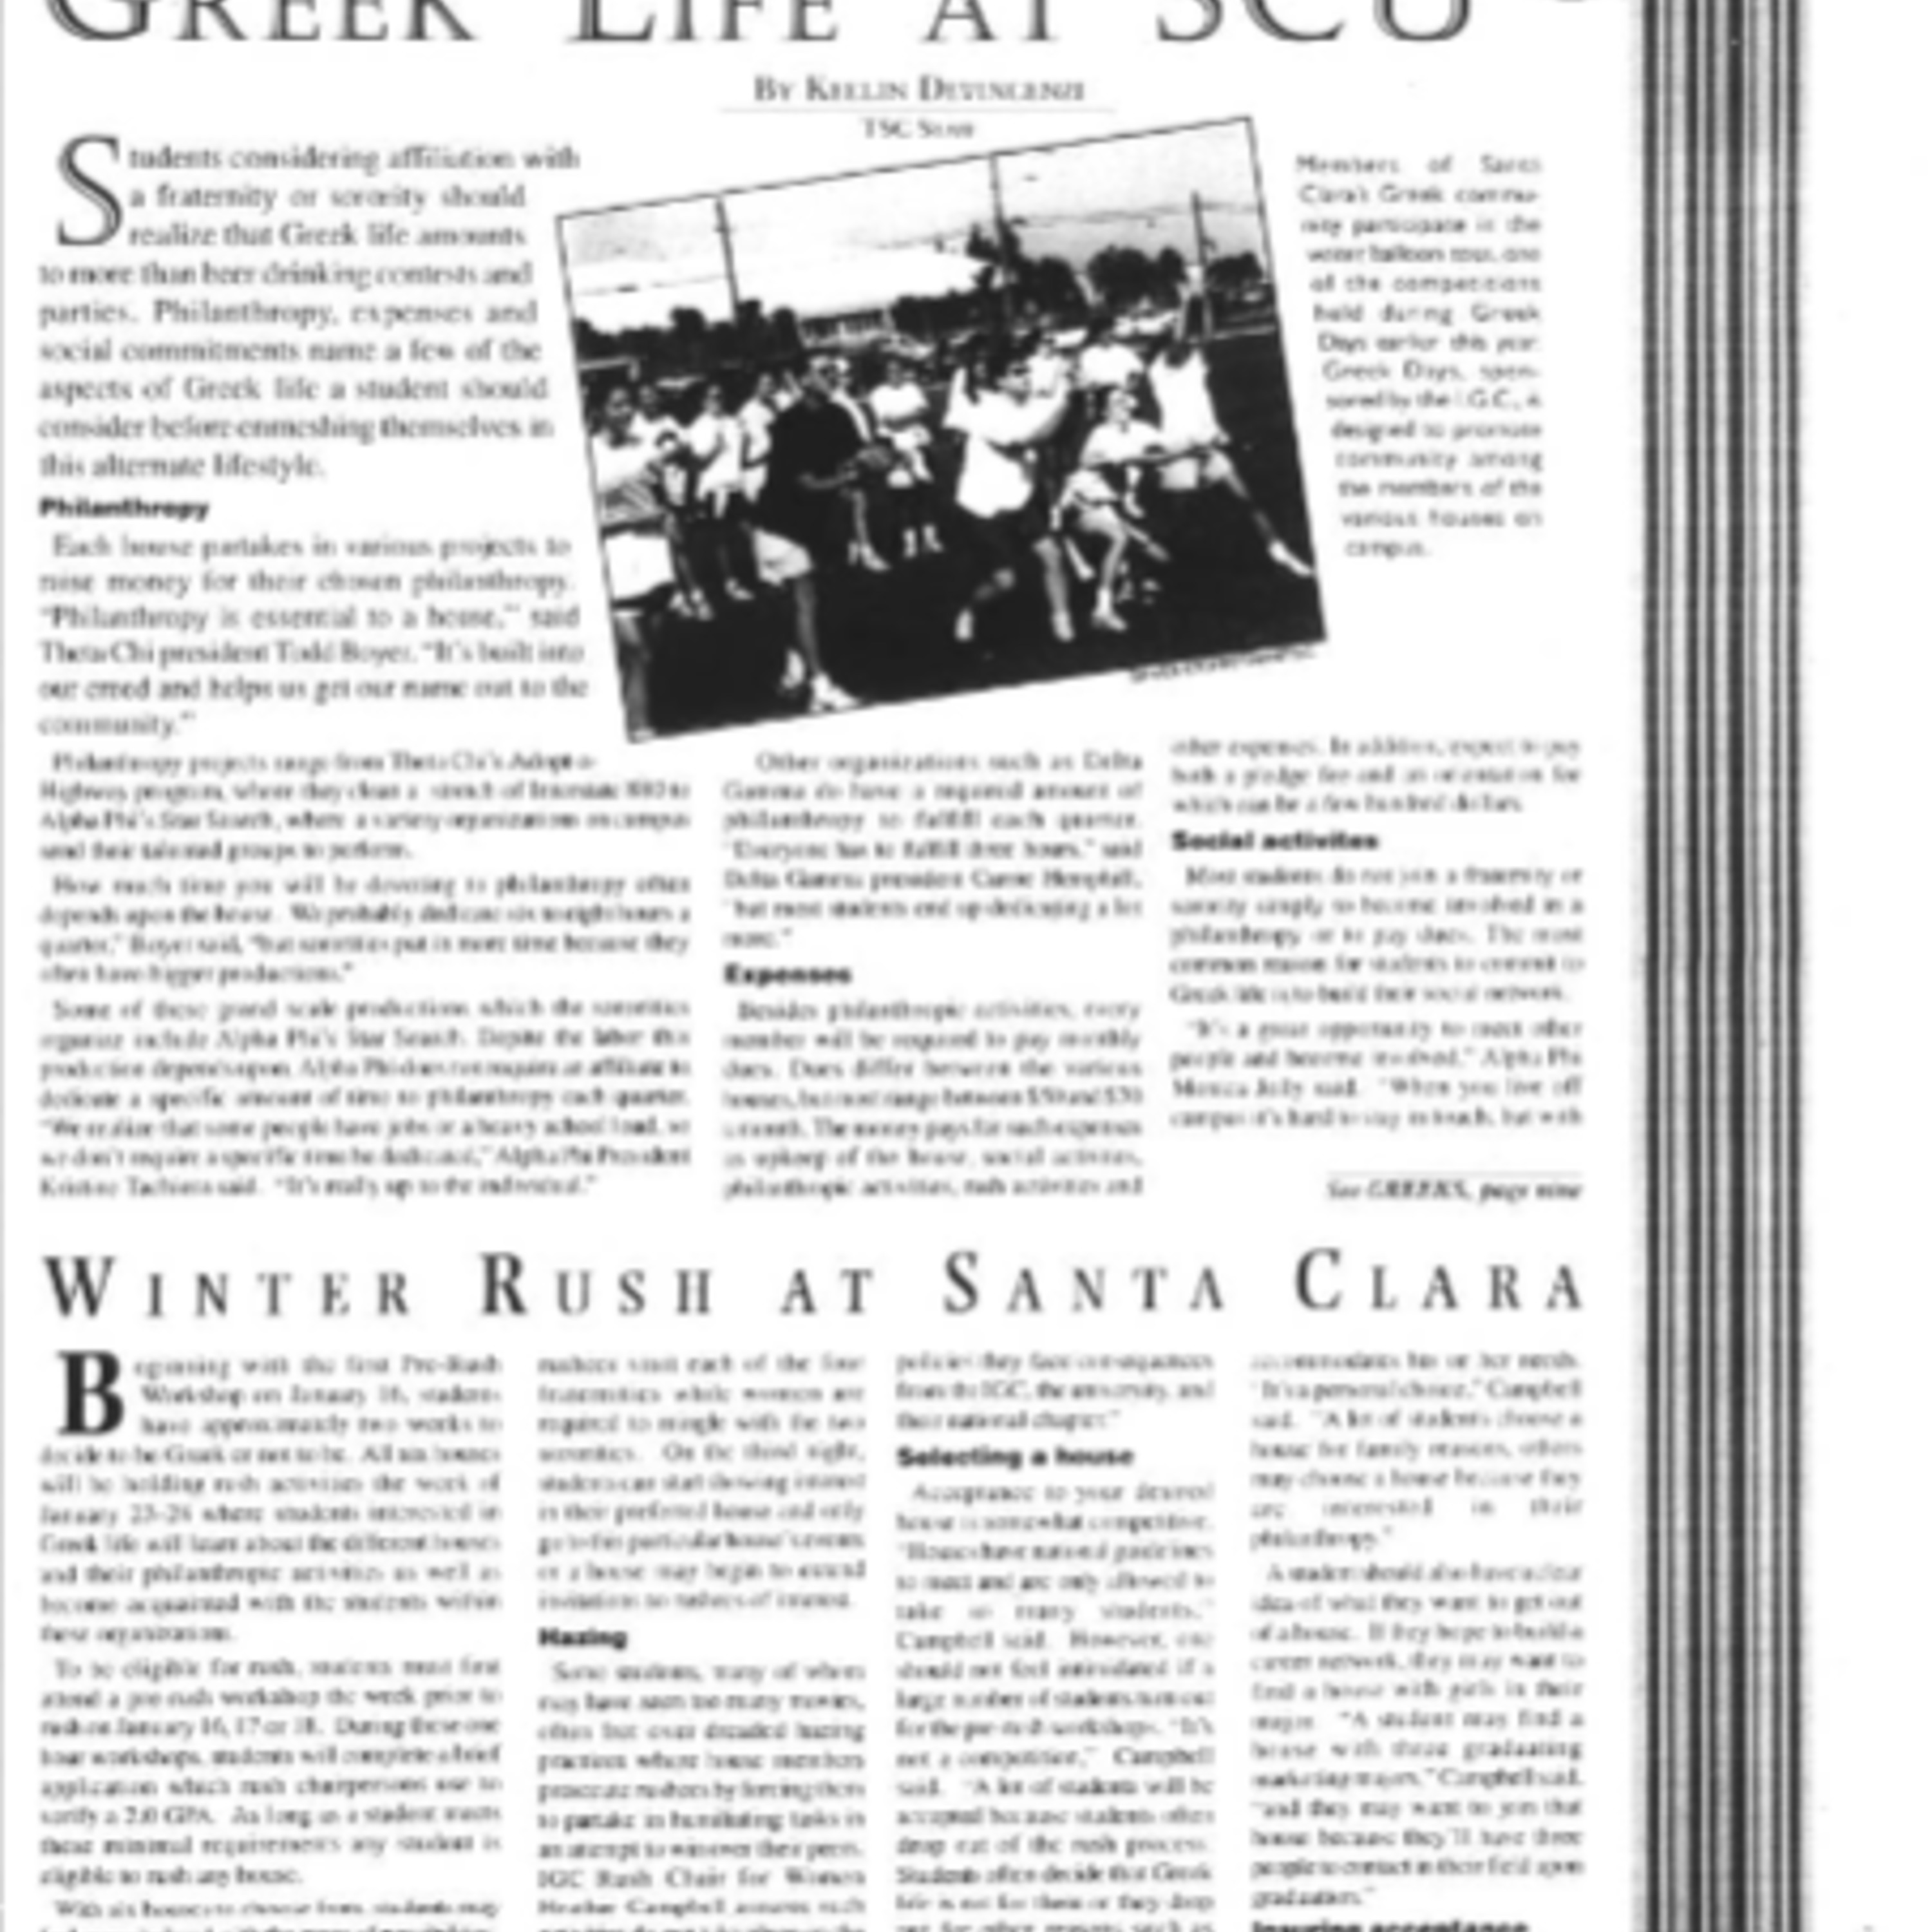 Greek Life @ SCU 1996.png